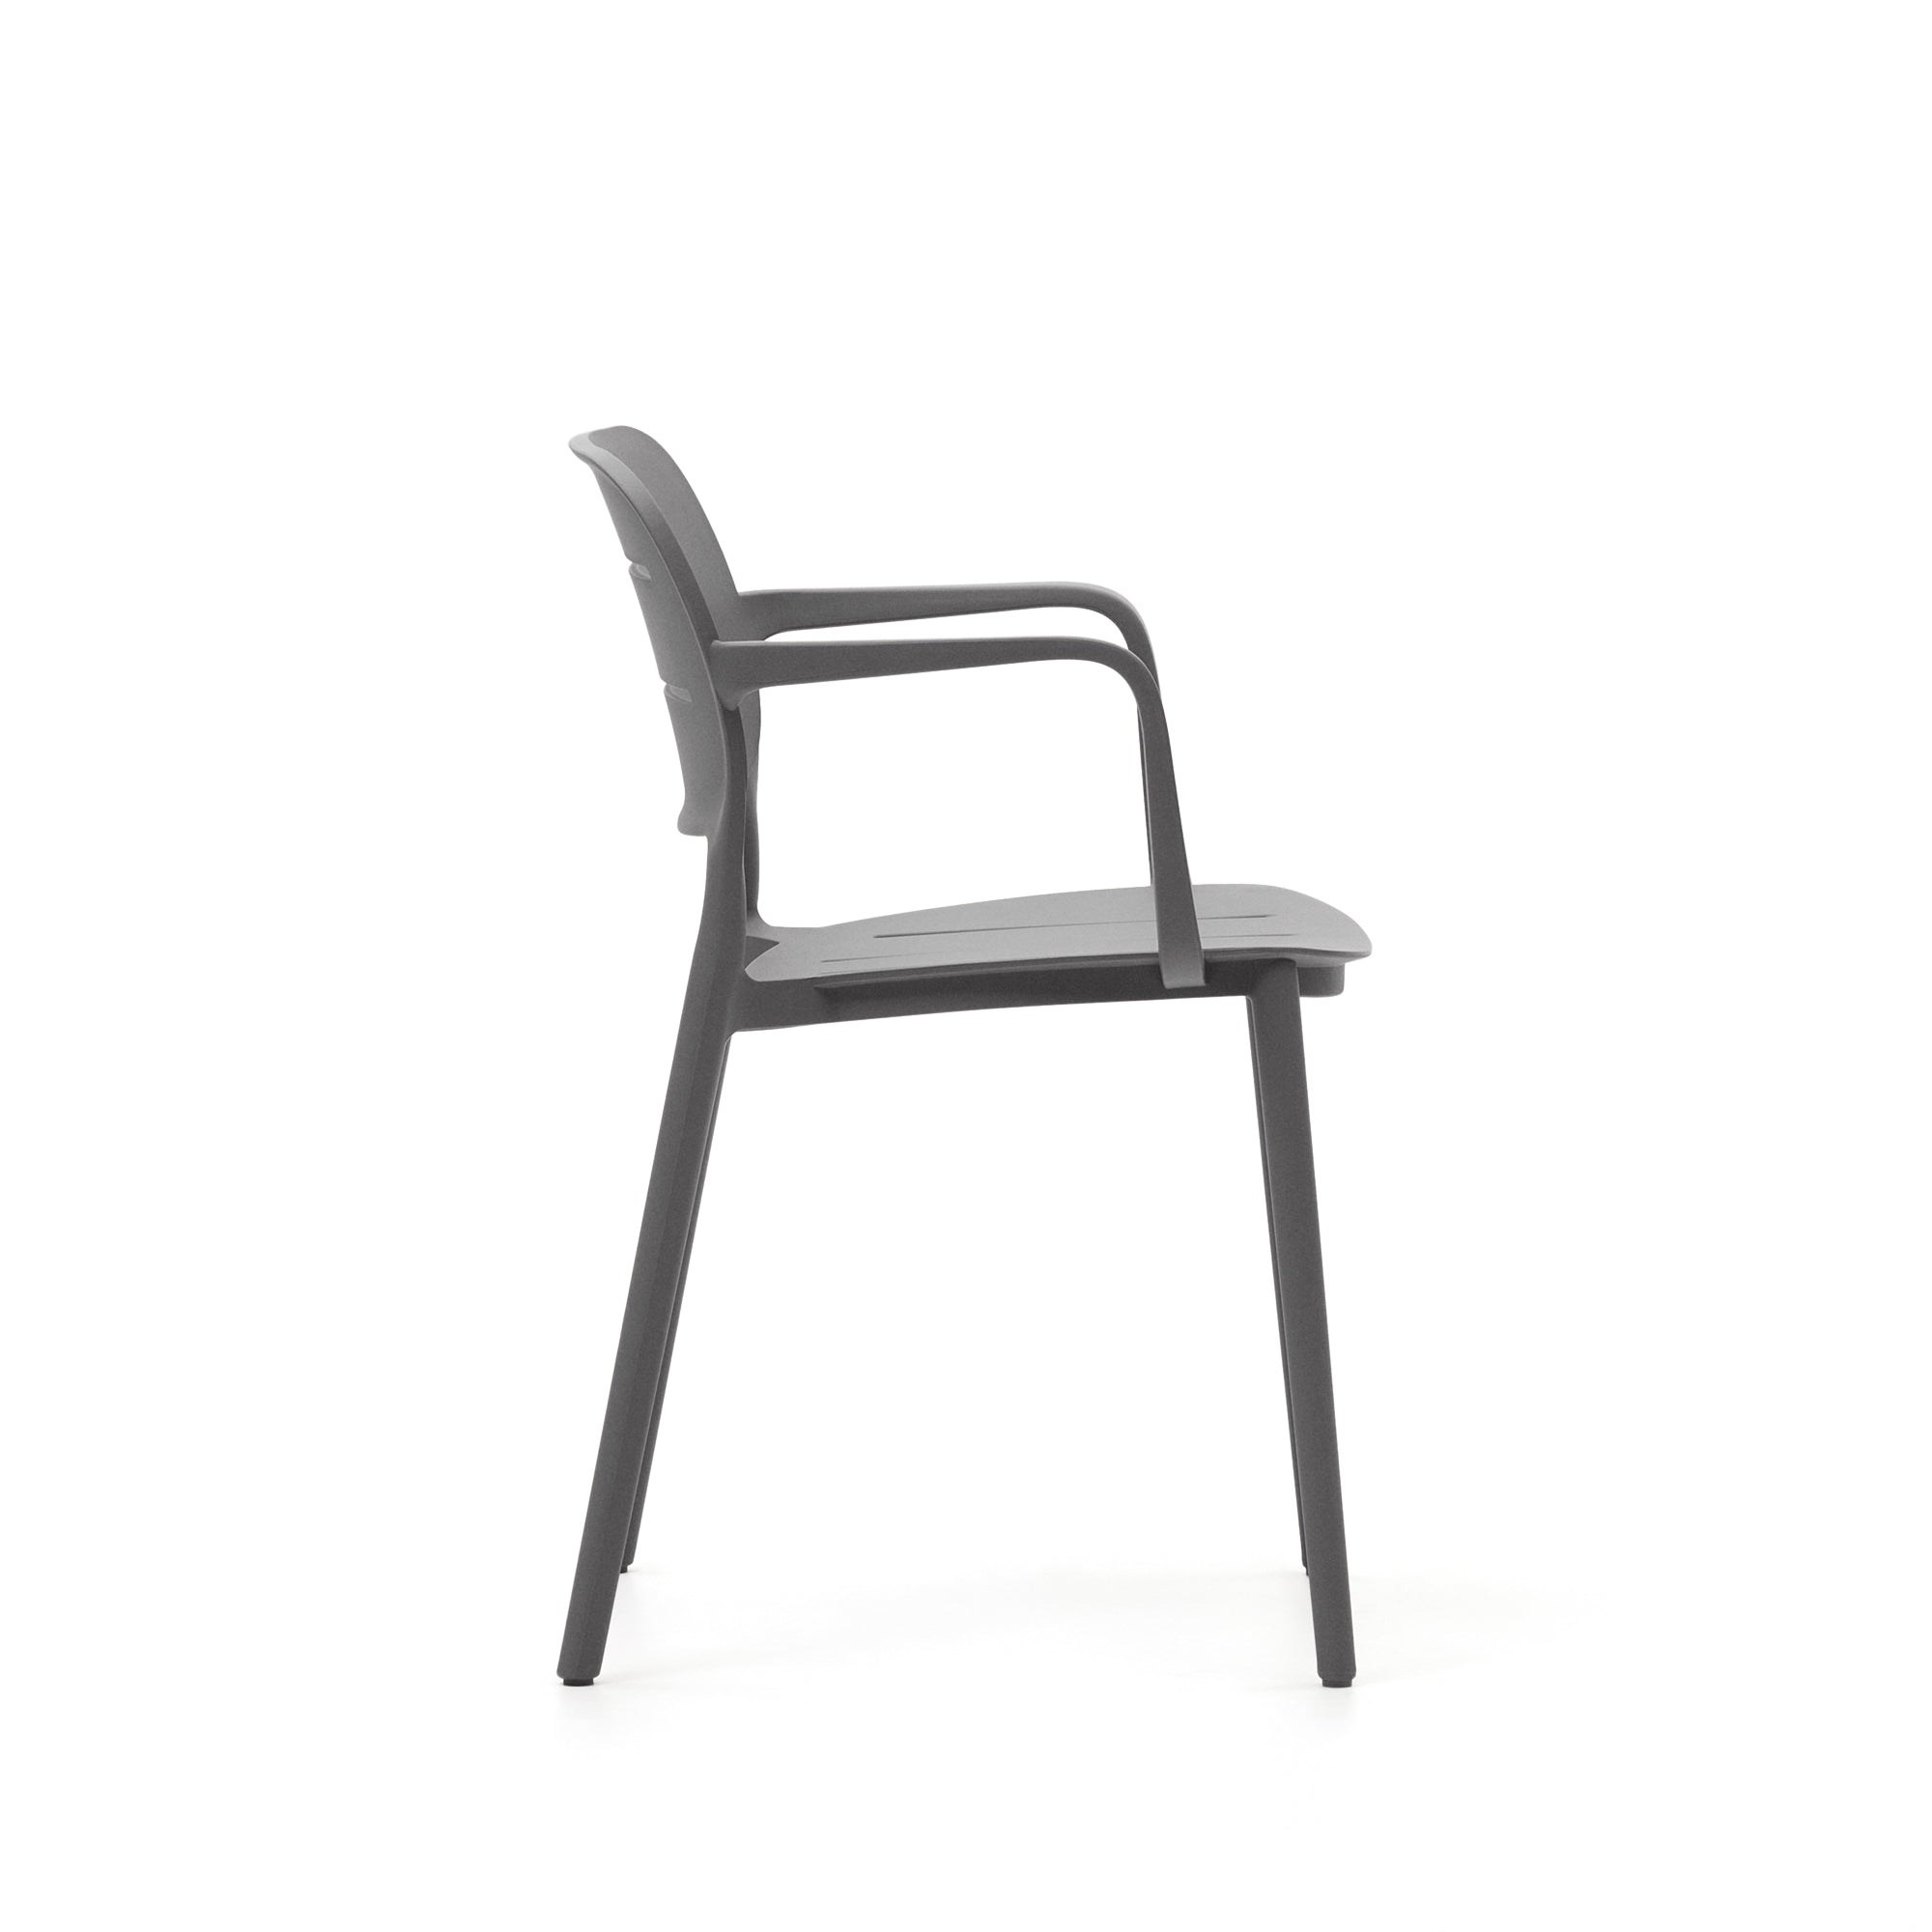 Morella stackable garden chair in grey